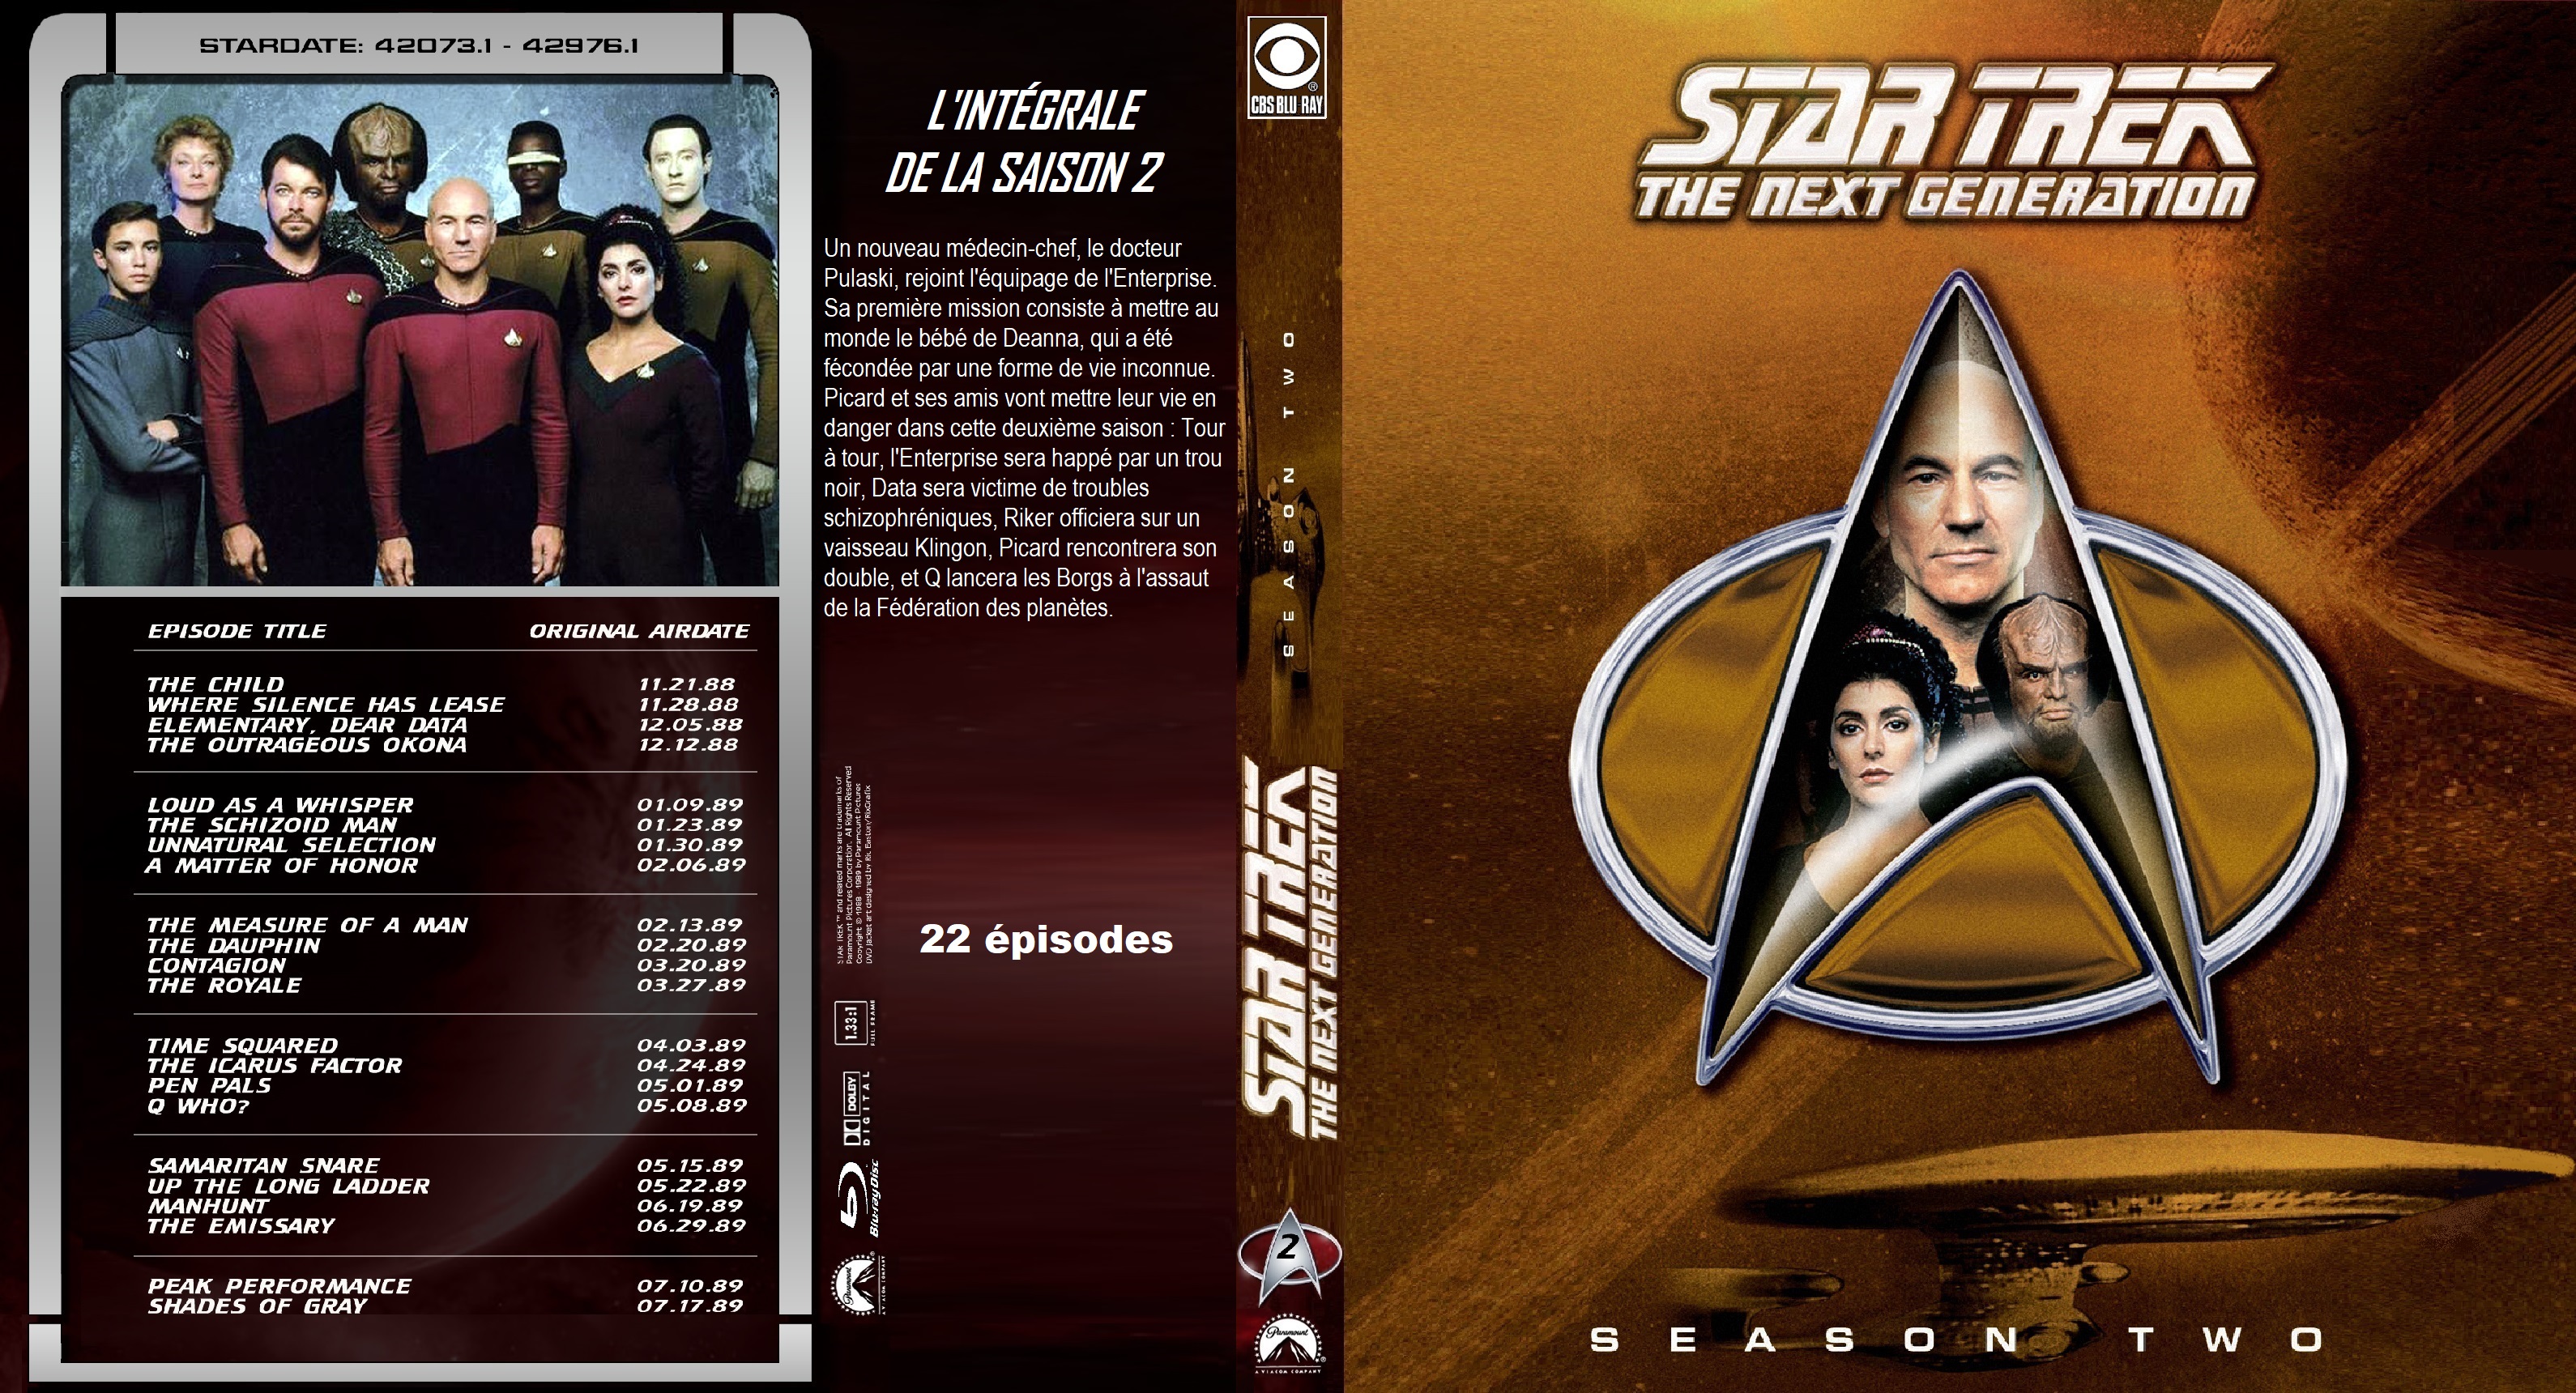 Jaquette DVD Star Trek The Next Generation saison 2 custom (BLU-RAY)